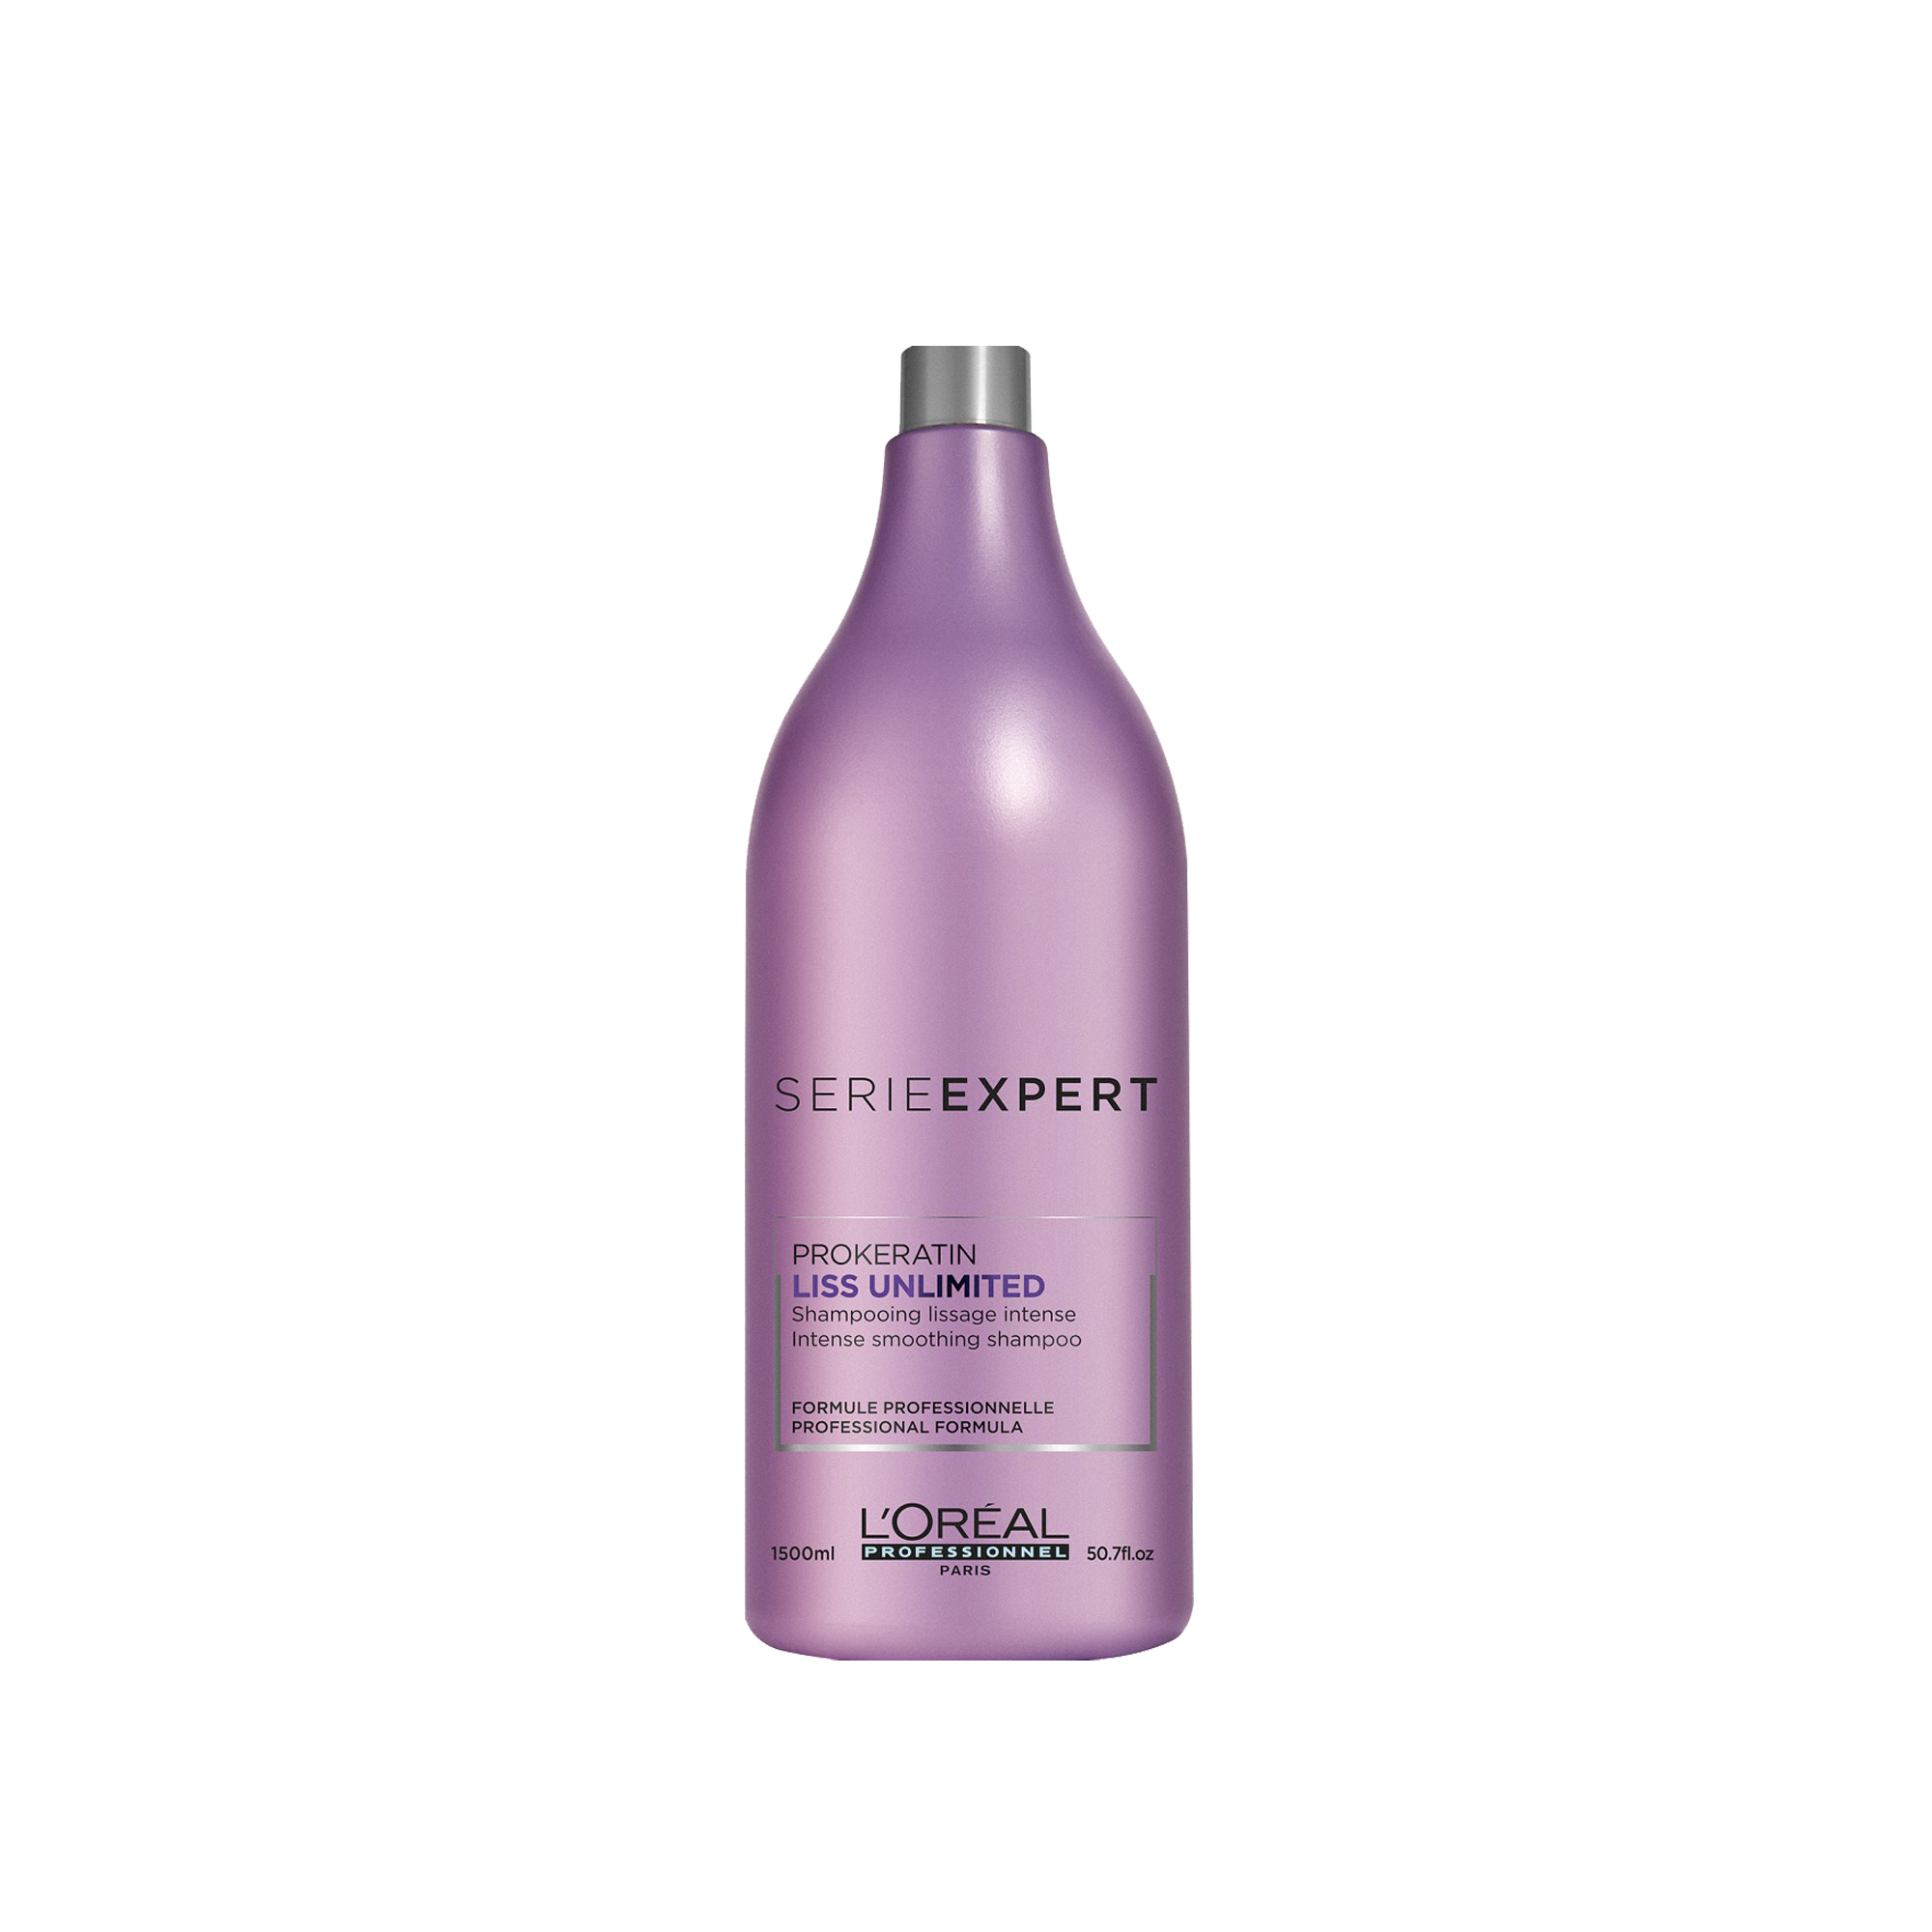 Liss Unlimited Shampoo SerieExpert L’Oréal